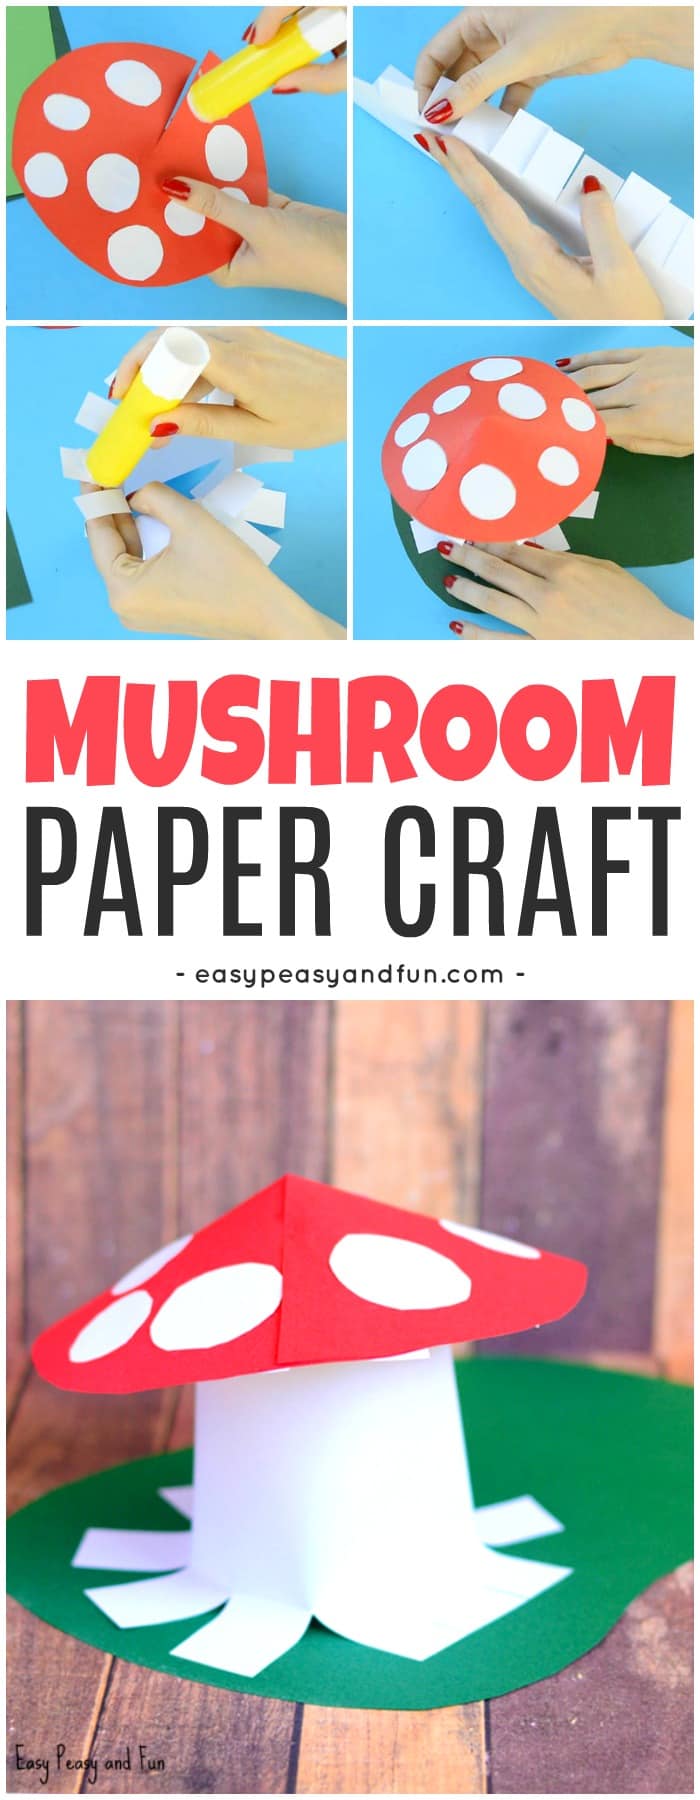 Cute mushroom paper craft made by kids